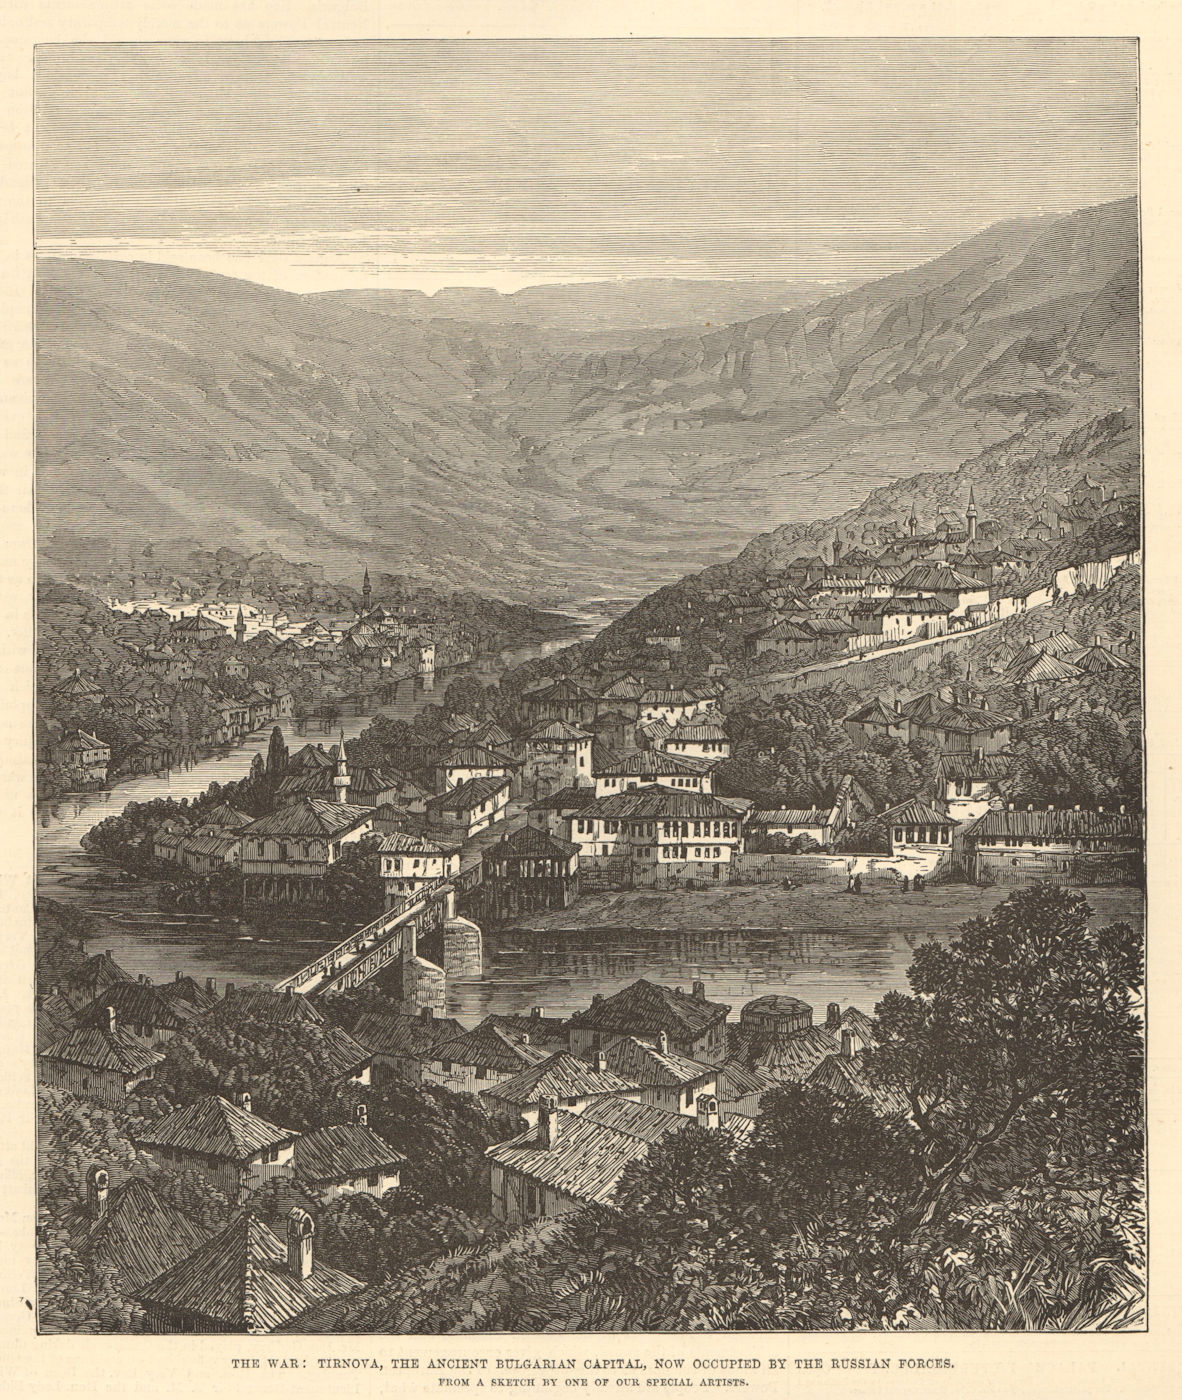 Associate Product Veliko Tarnovo (Tirnova) ancient Bulgarian capital occupied by Russian army 1877